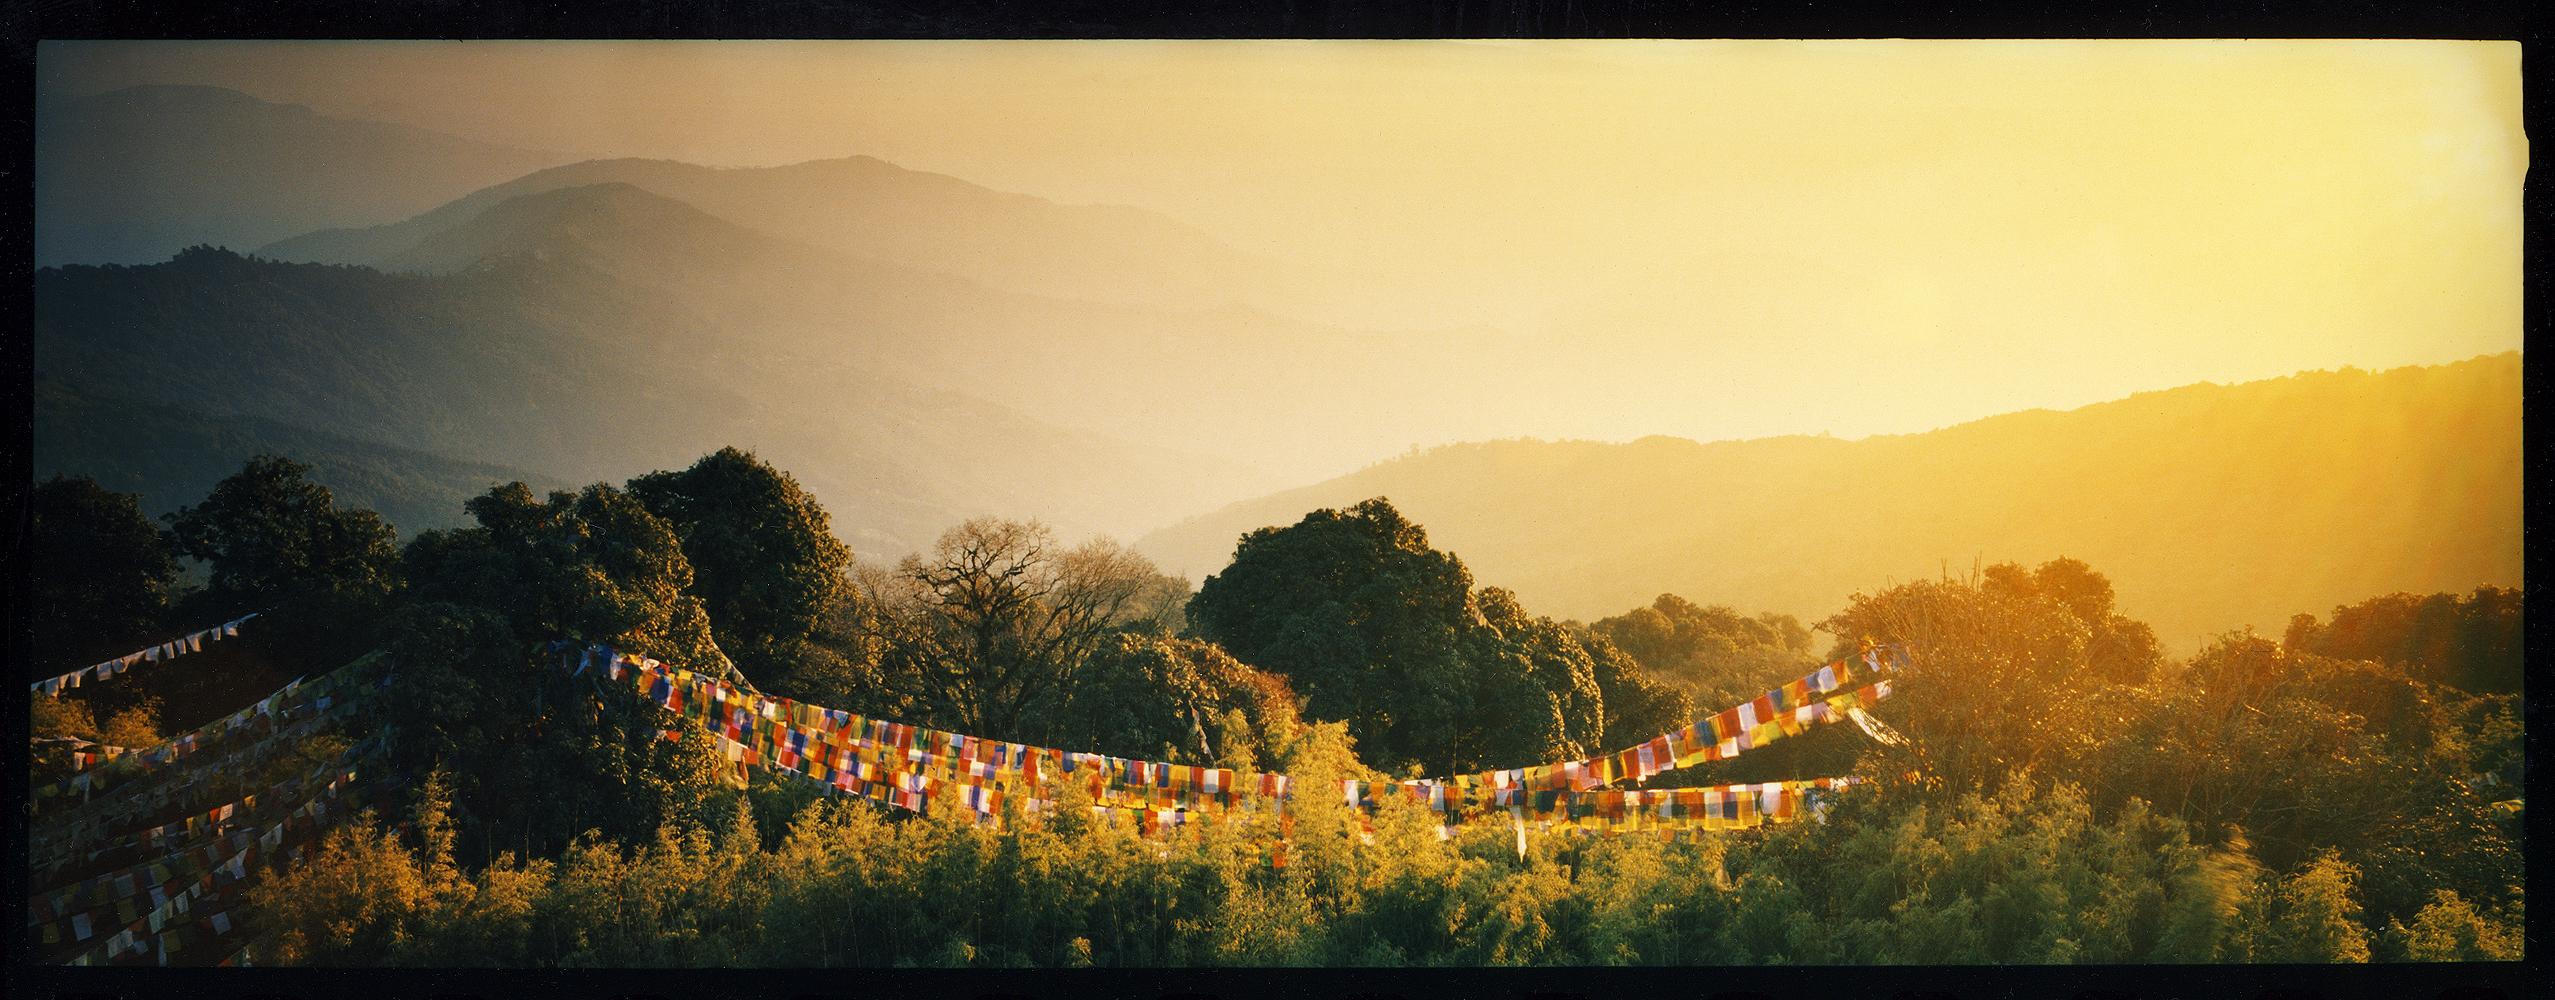 Richard Heeps Landscape Print - Prayer Flags, Darjeeling, - Sunrise, landscape color photography